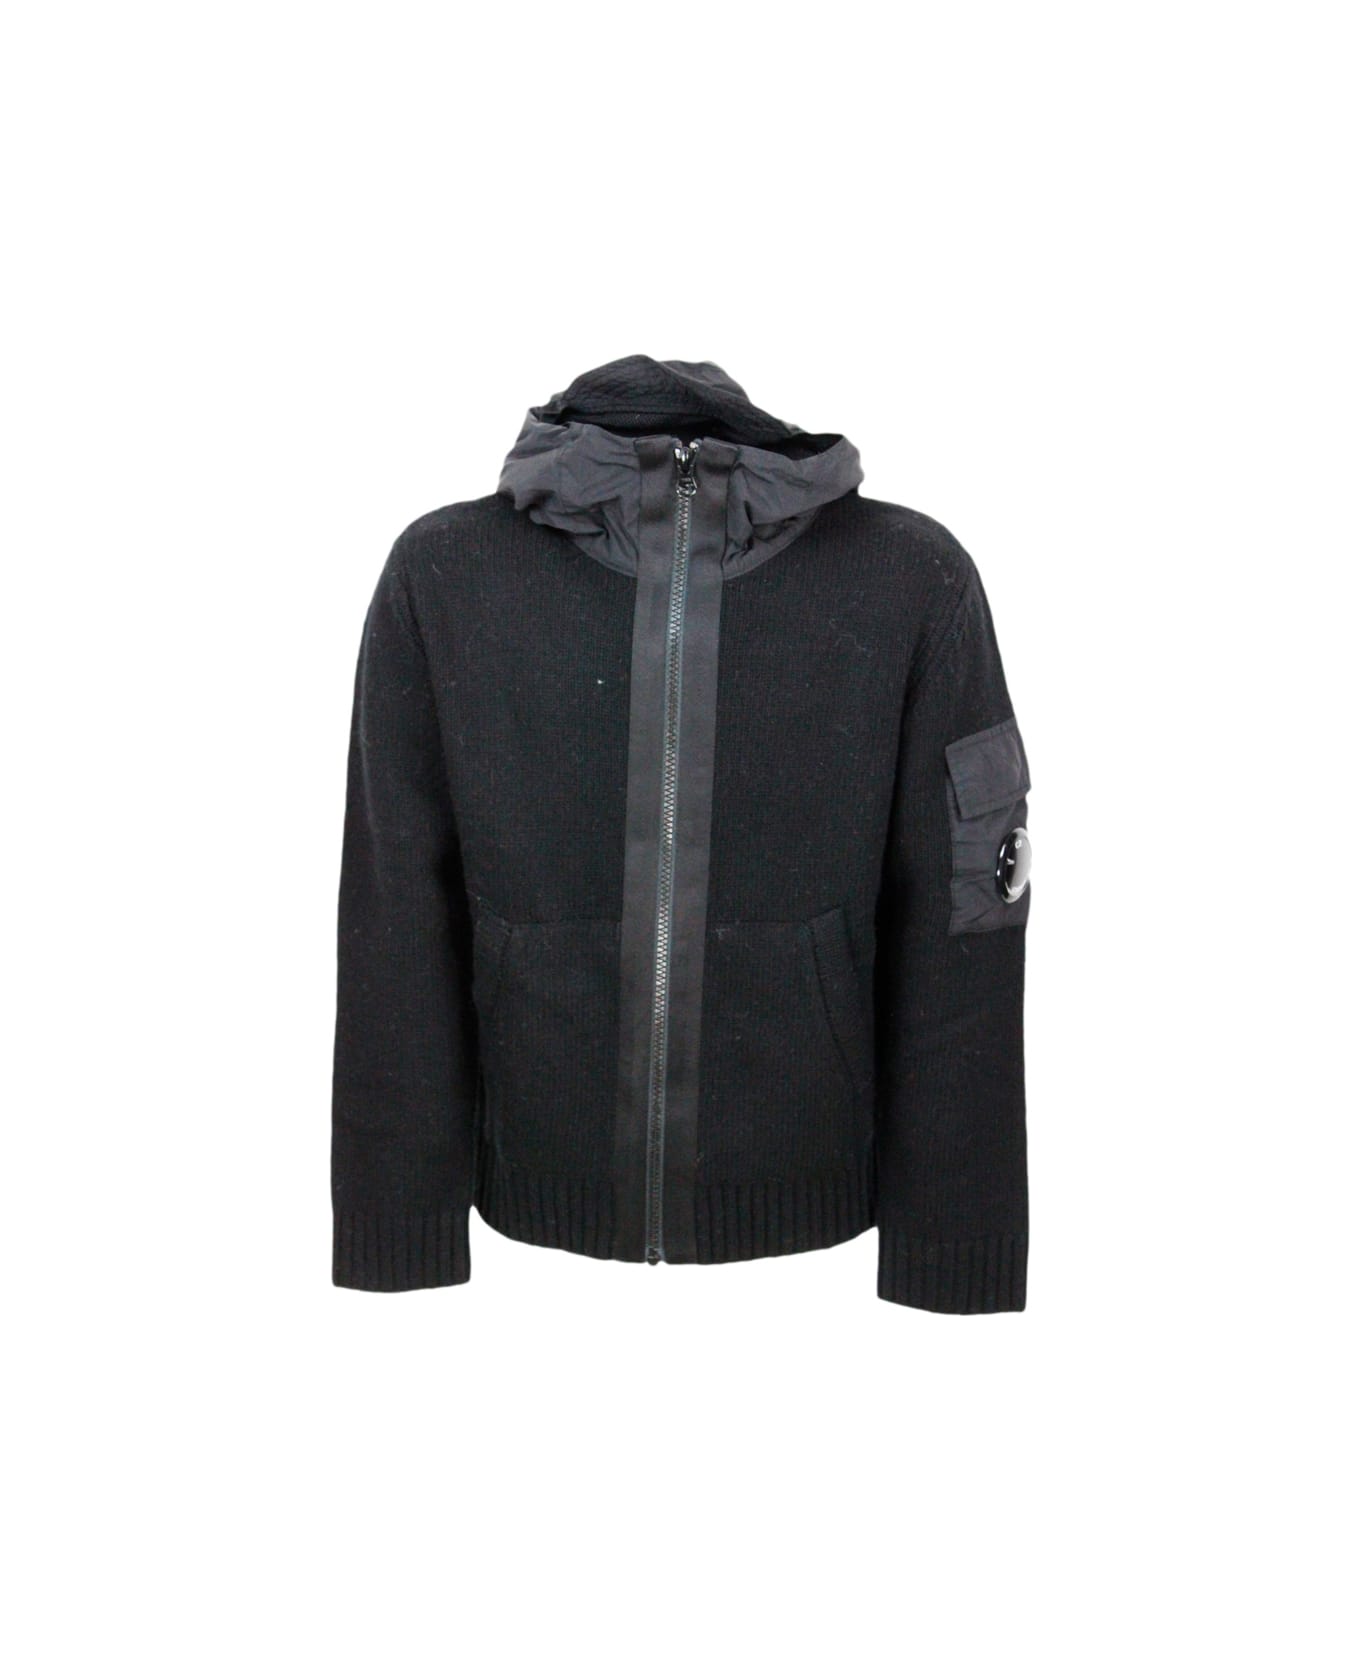 C.P. Company Wool Sweater With Long Sleeve Full Zip Closure With Nylon Hood With Logo On The Sleeve And Kangaroo Pockets - Black